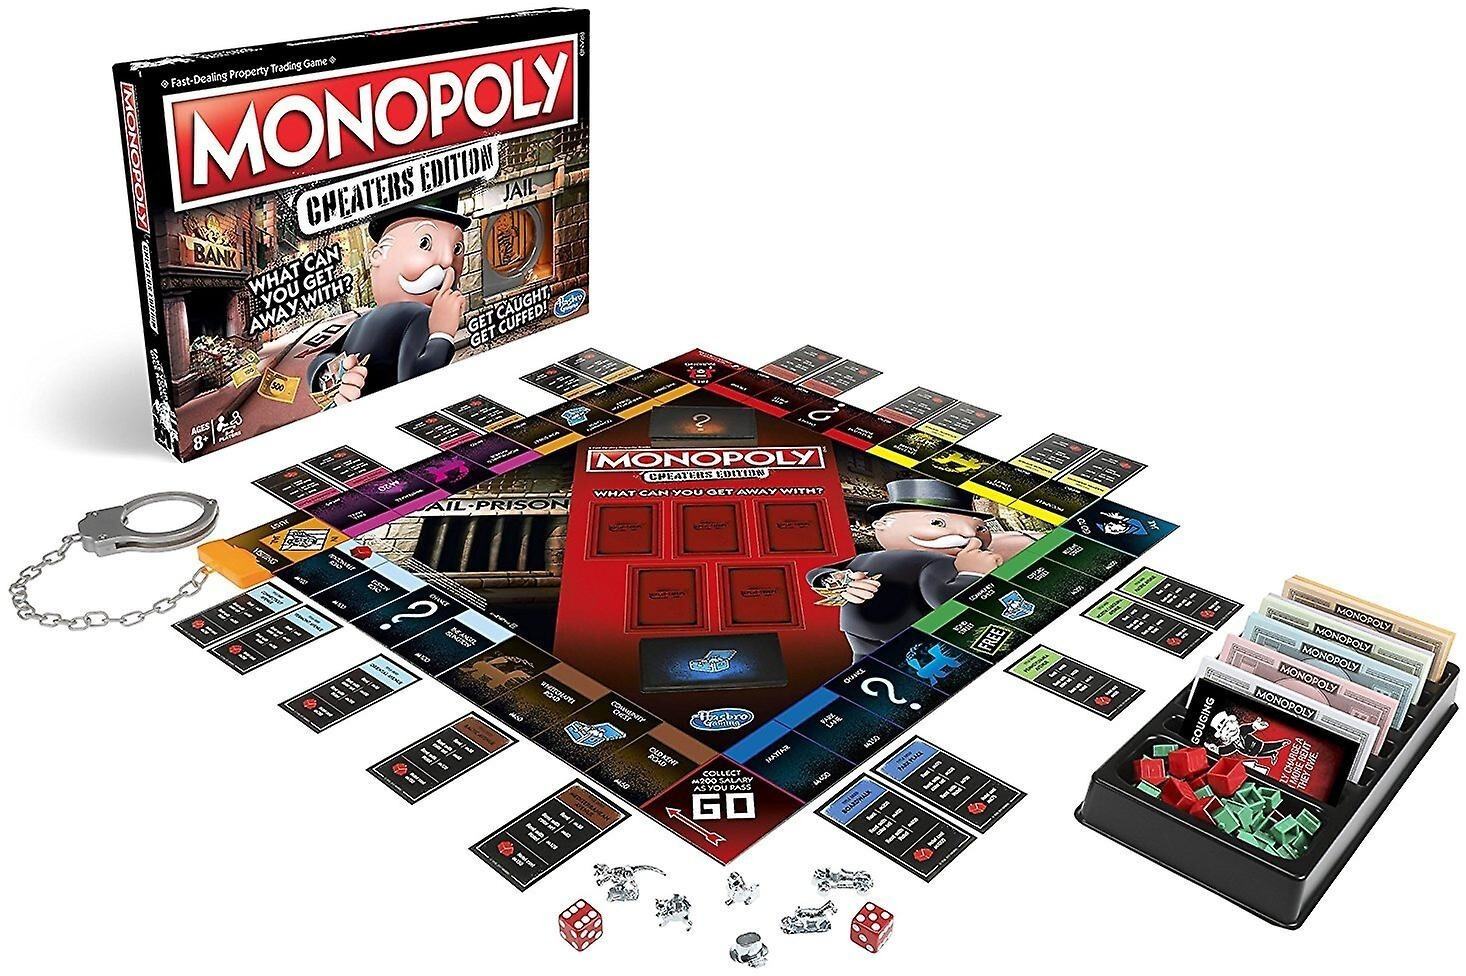 hasbro monopoly cheaters